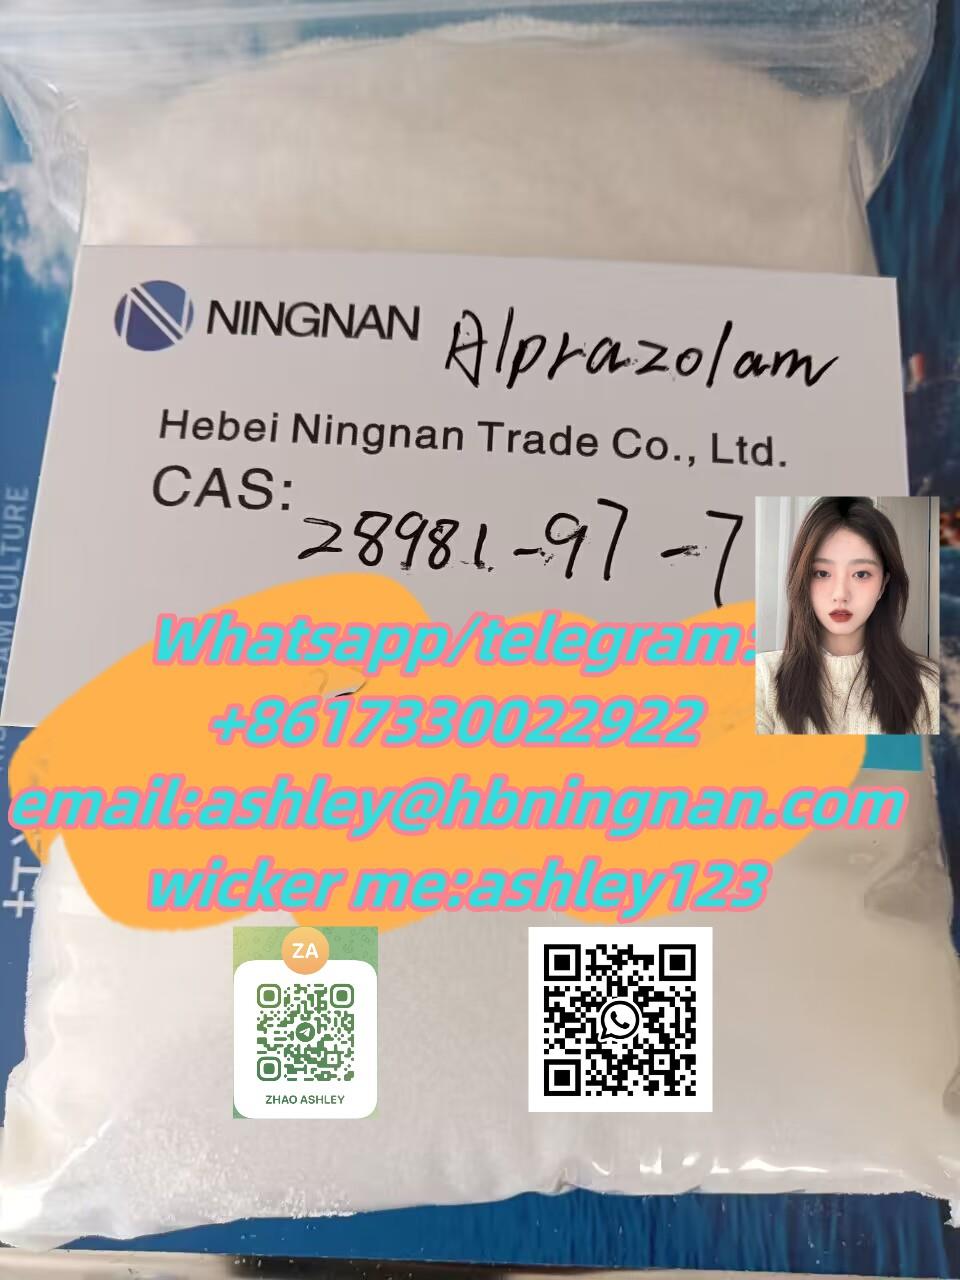 cas 28981-97-7 Alprazolam Safe shipping Pharmaceutical intermediate